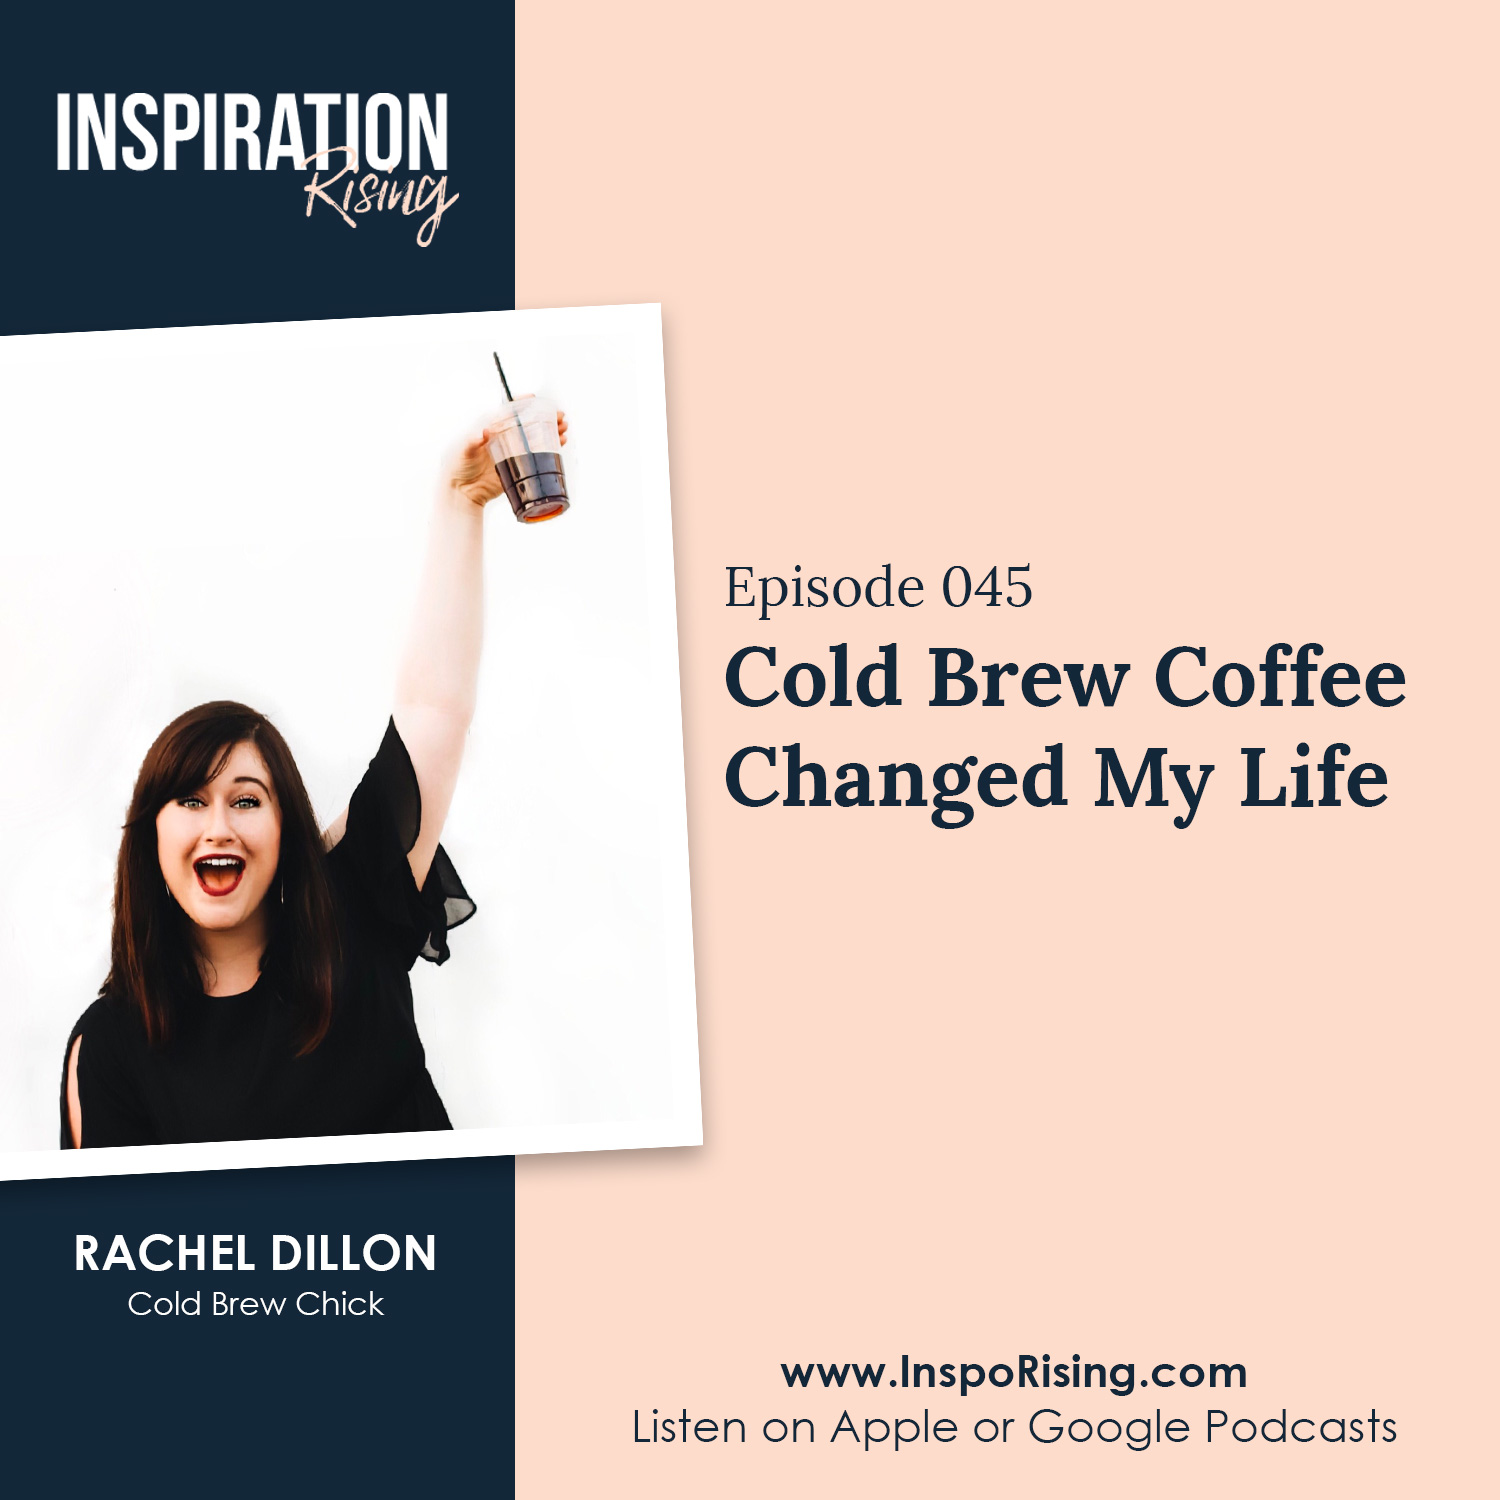 Rachel Dillon - Cold Brew Chick